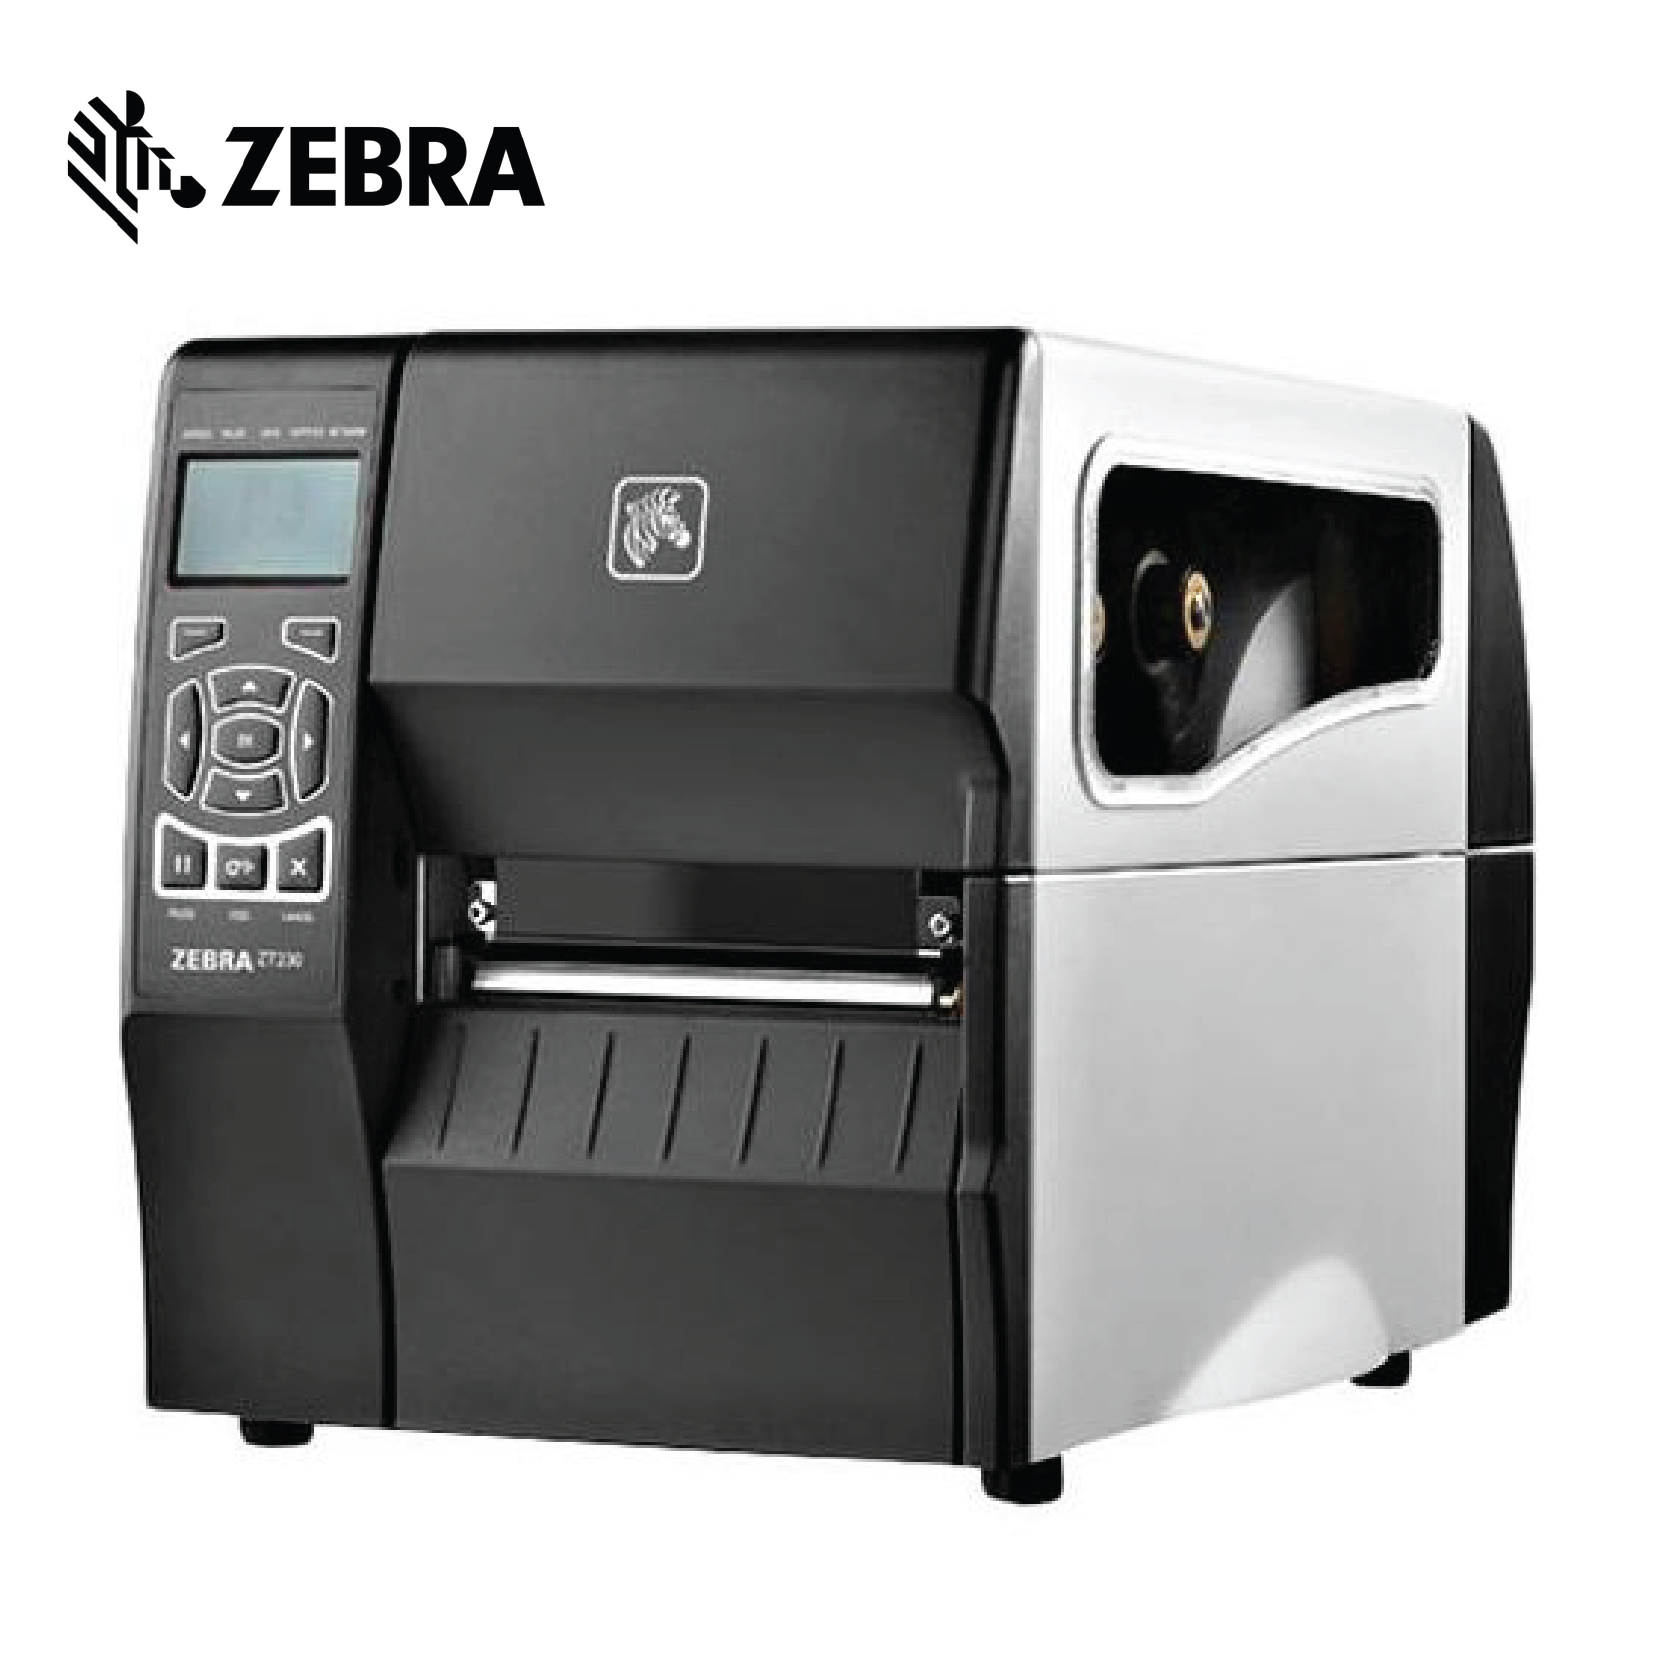 Zebra ZT230 Label Printer | Malaysia Zebra Distributor